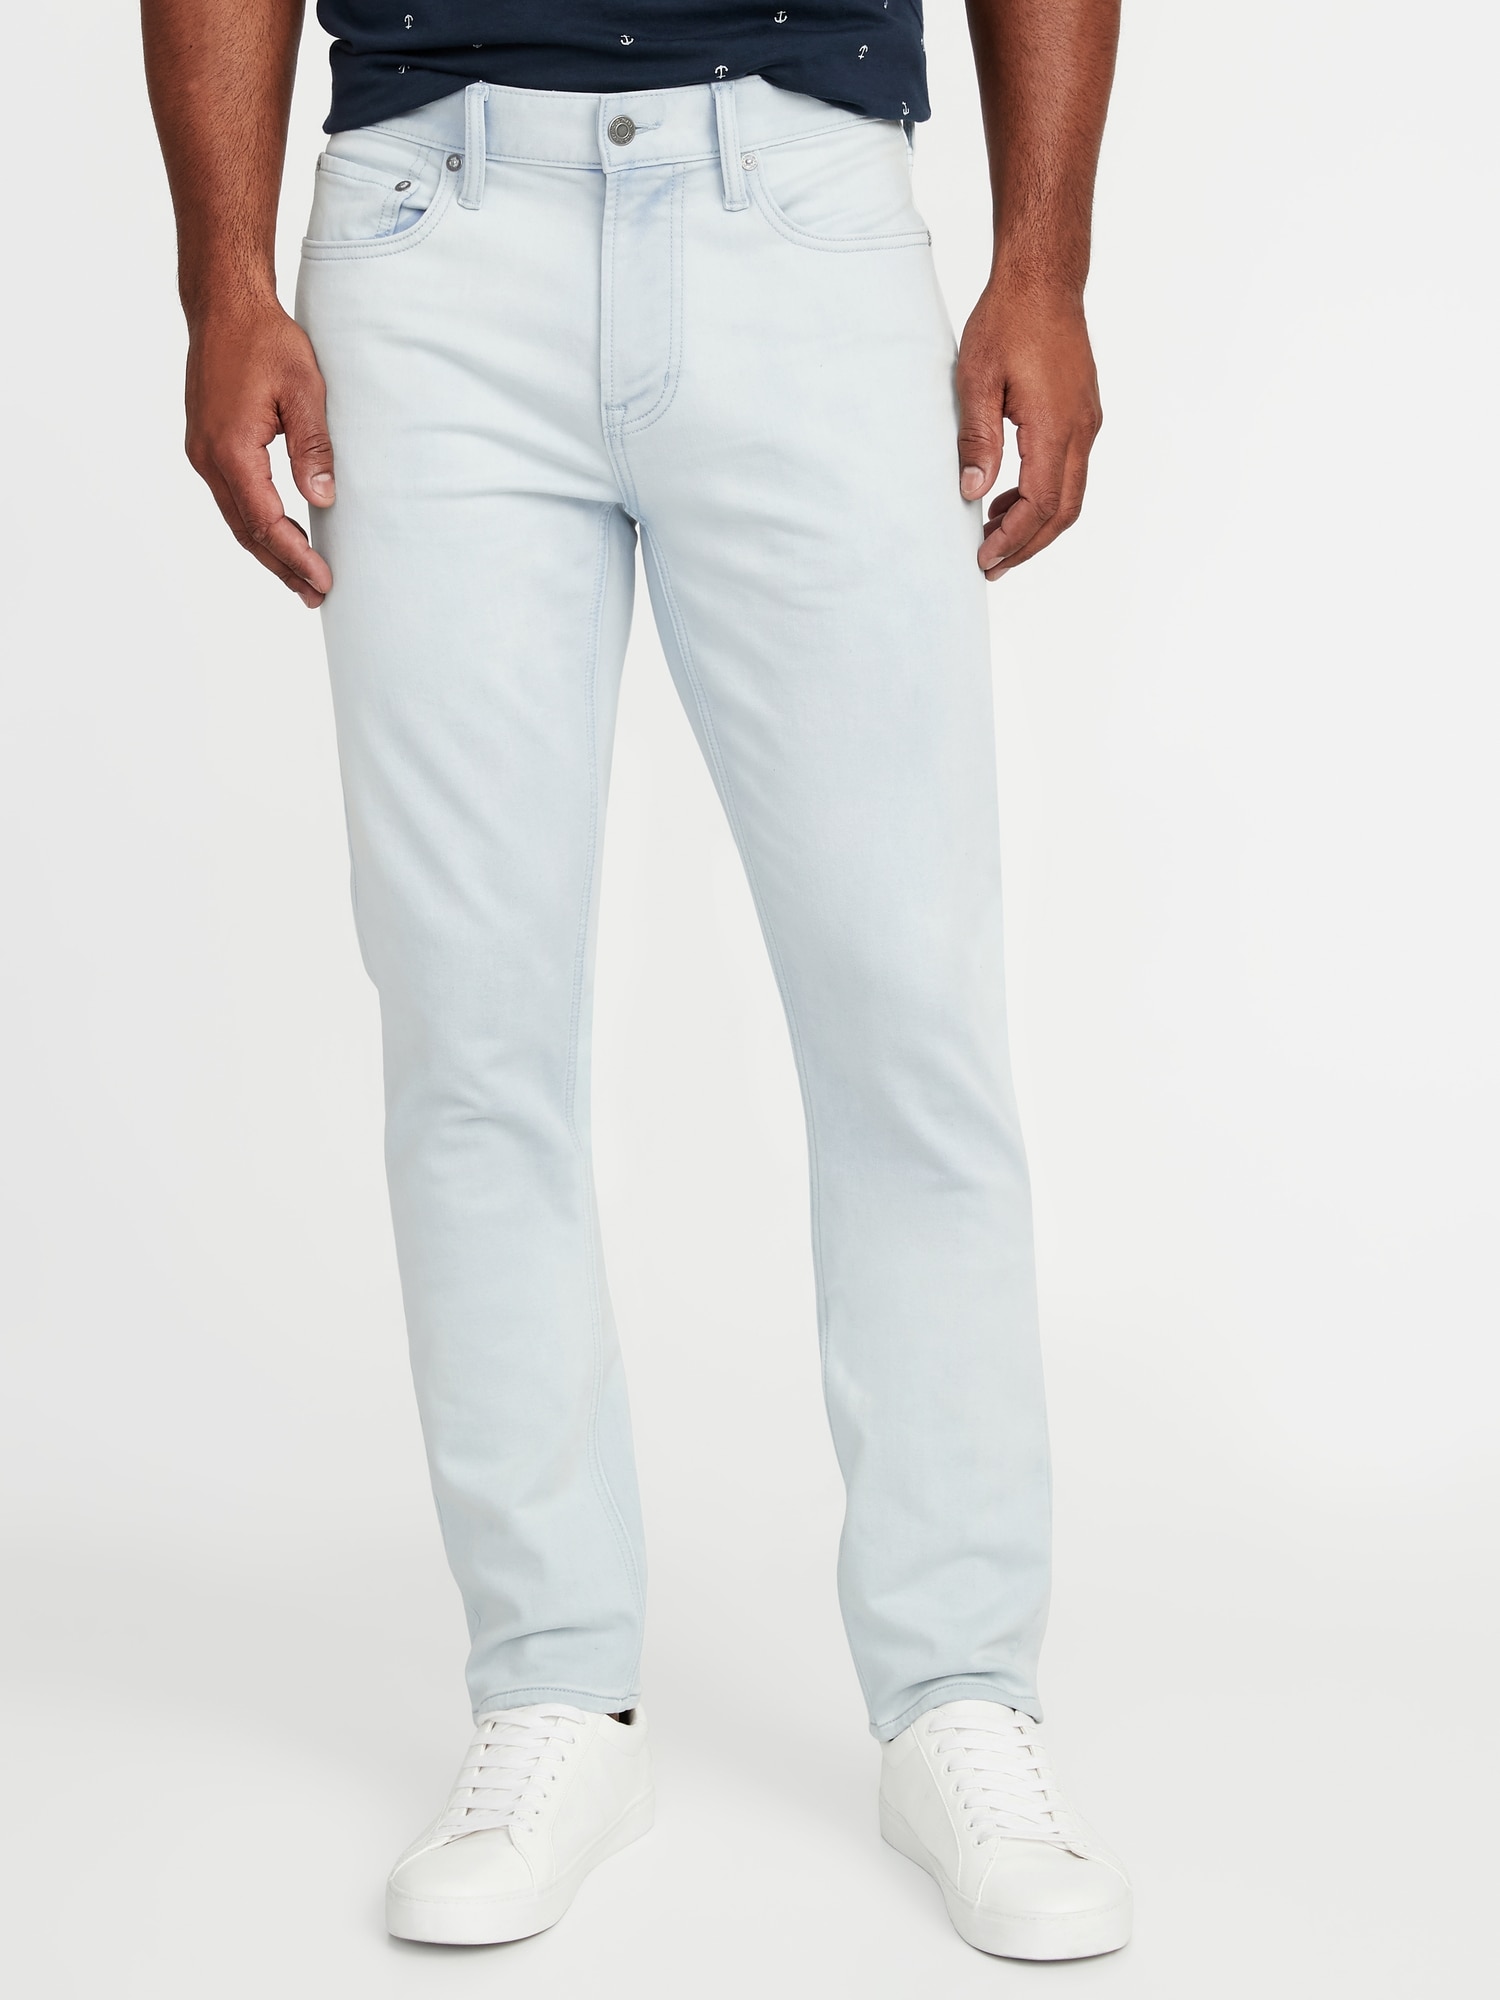 Old Navy Men's Slim Built-In-Flex Jeans - Blue - Size 30W